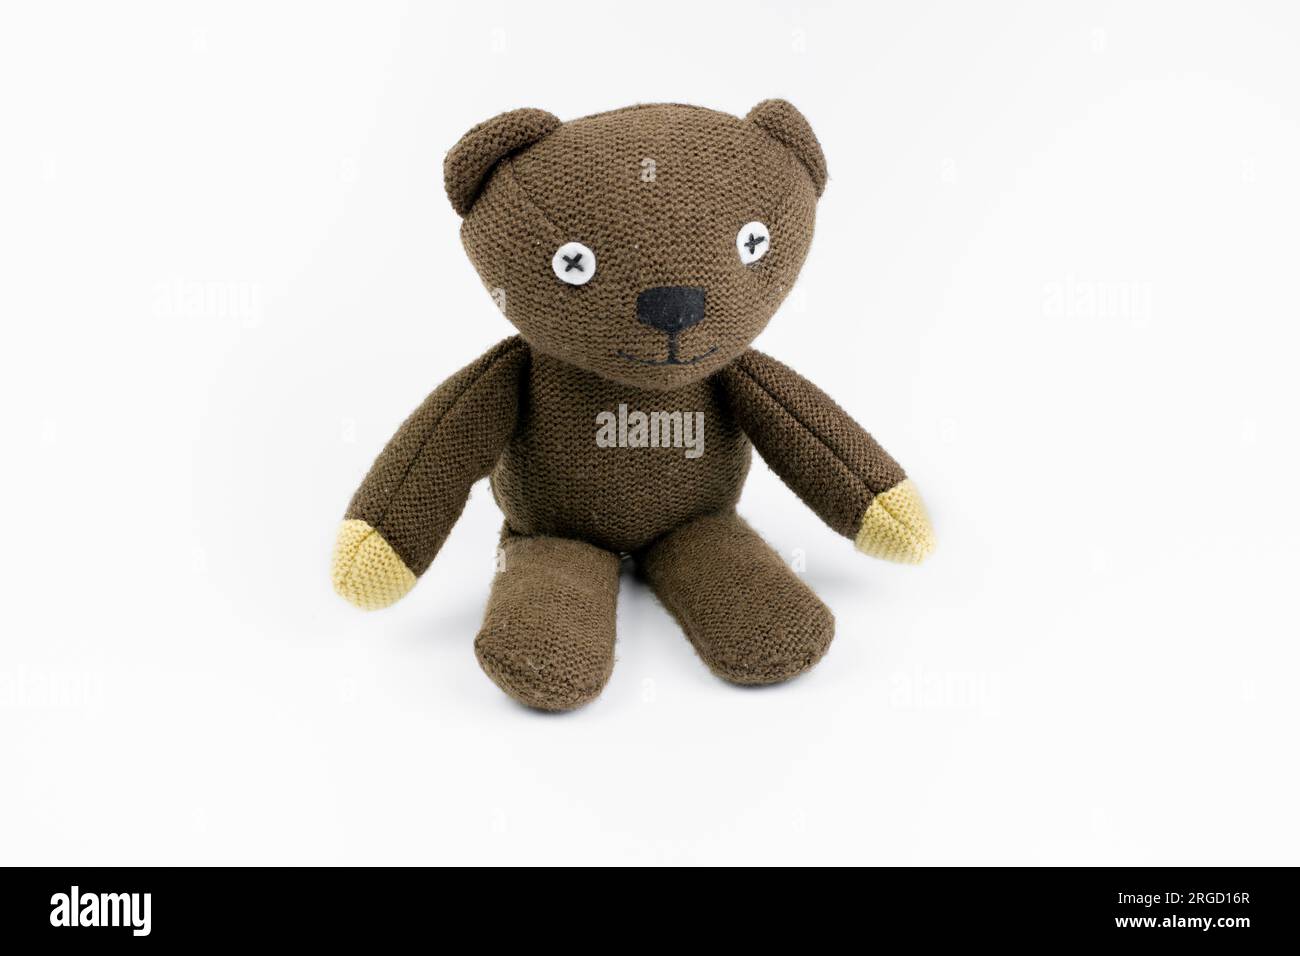 https://c8.alamy.com/comp/2RGD16R/nova-bana-slovakia-august-7-2023-a-replica-of-mr-beans-teddy-bear-isolated-on-white-background-2RGD16R.jpg